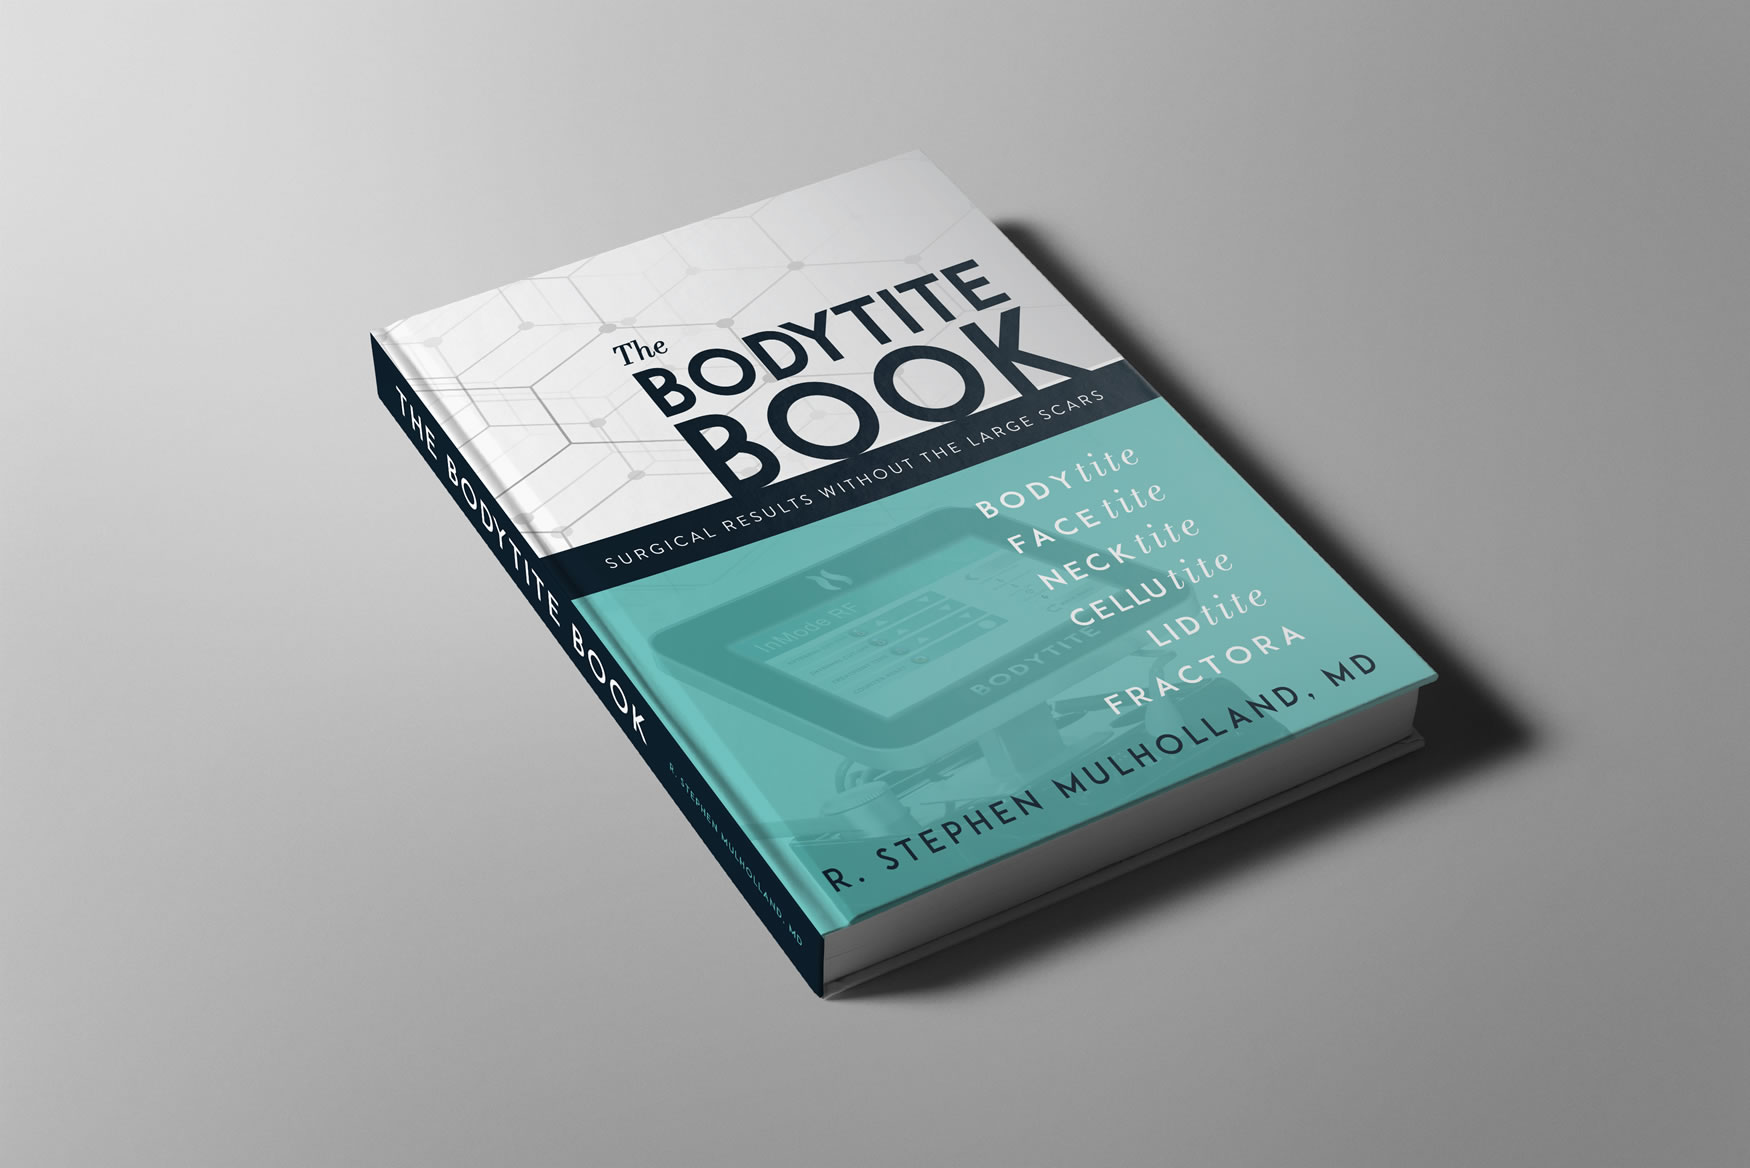 bodytite-book